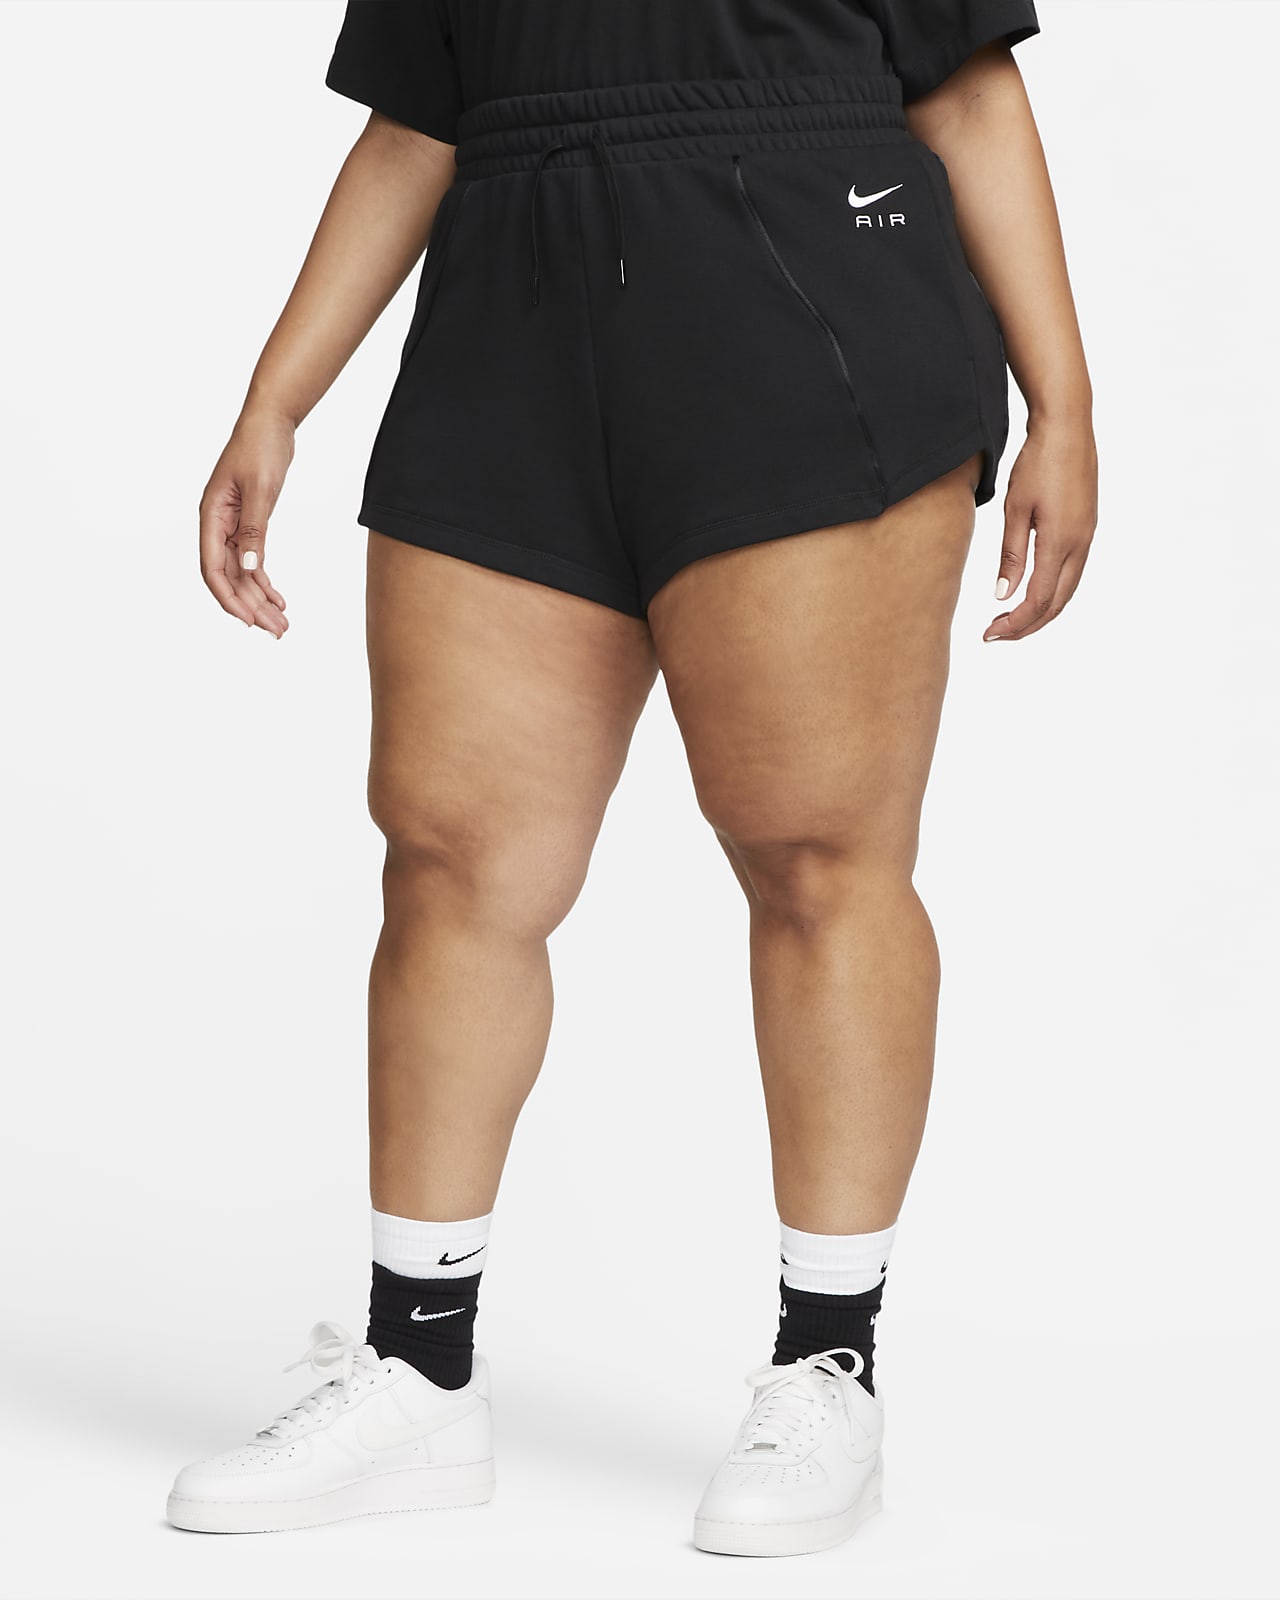 Nike Air Women's High-Rise Fleece Shorts (Plus Size)